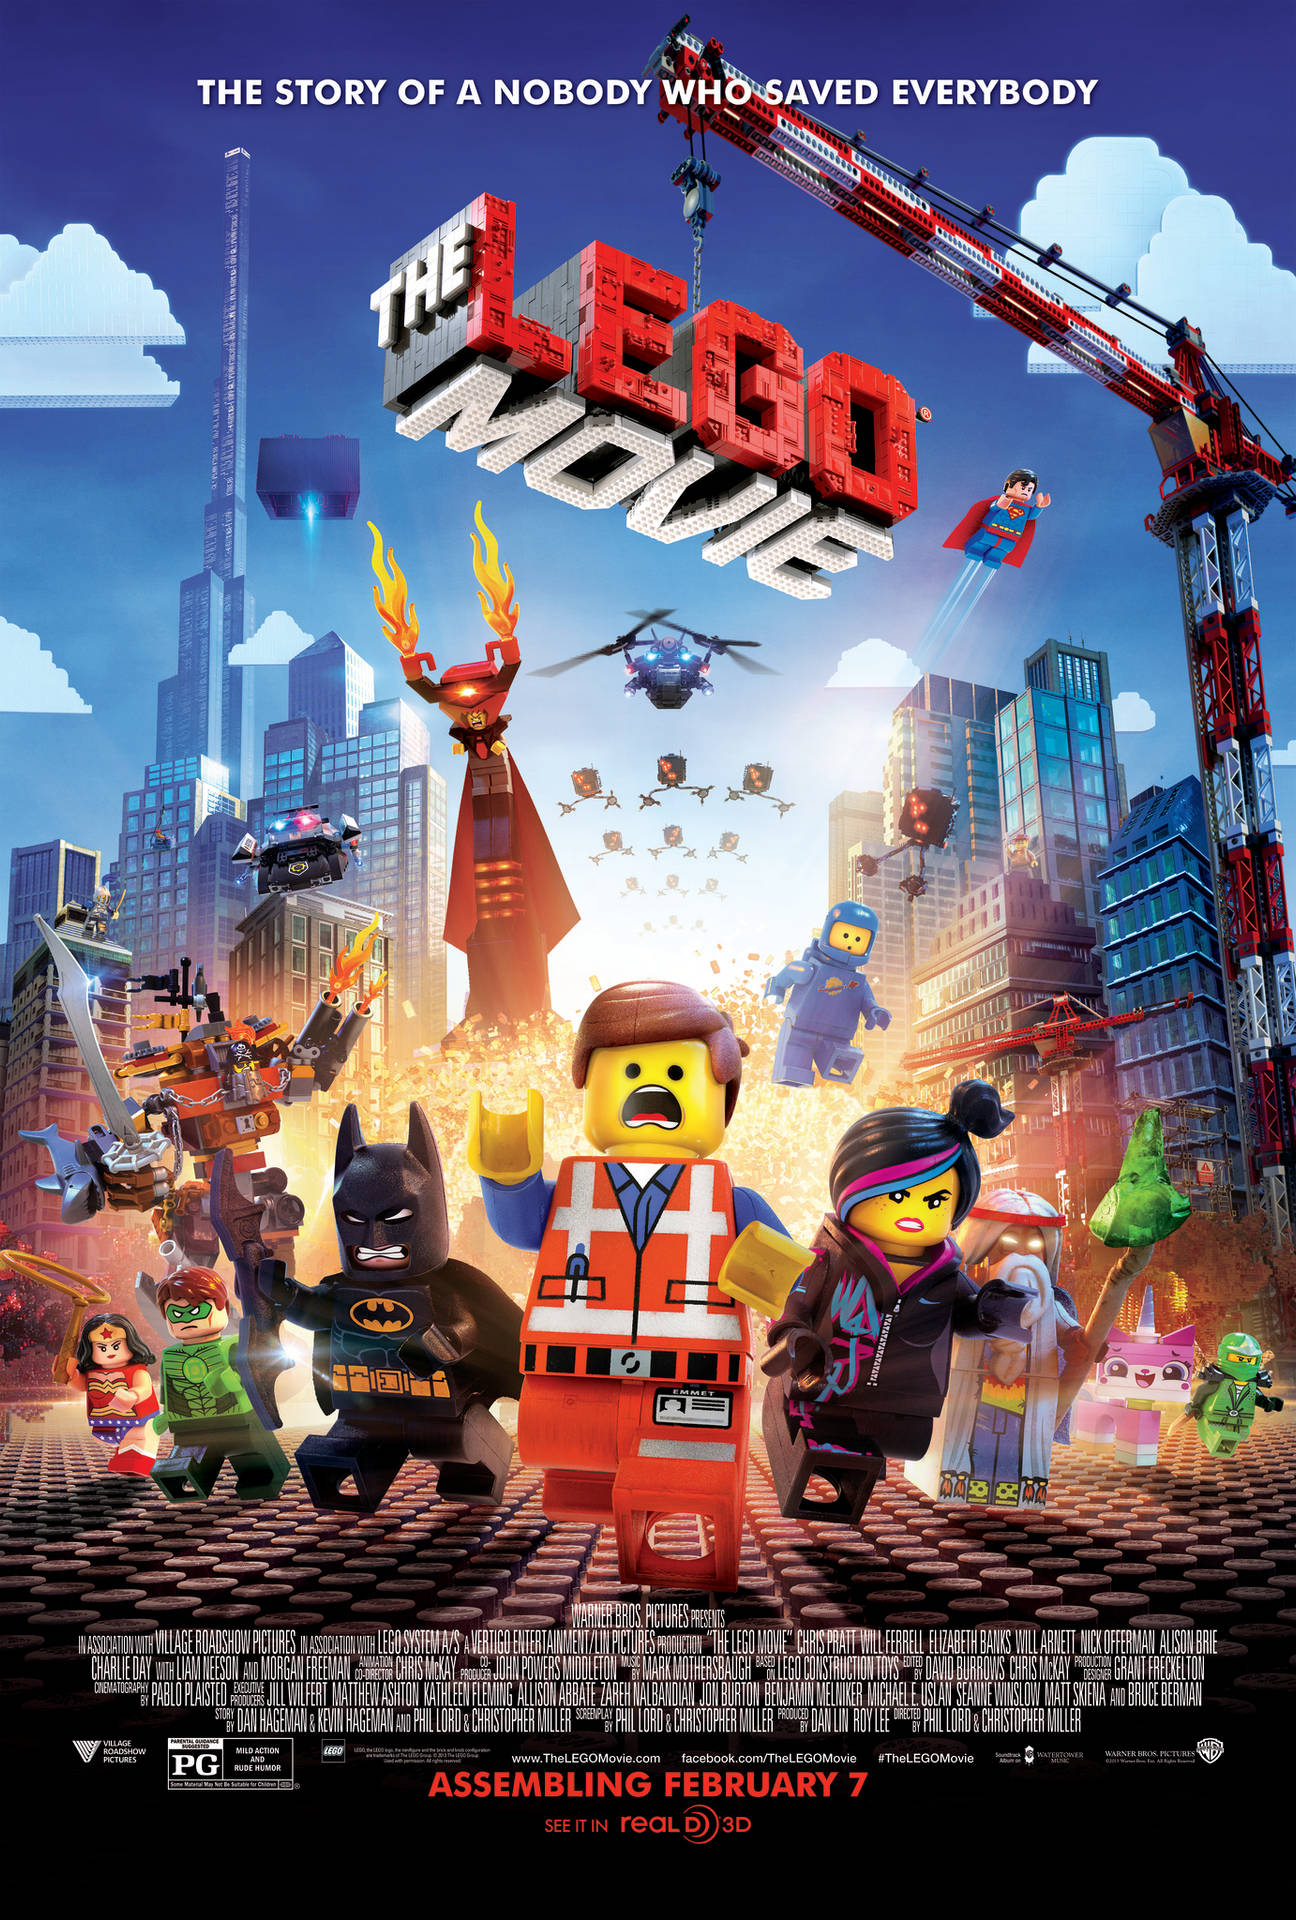 Running The Lego Movie Poster Wallpaper